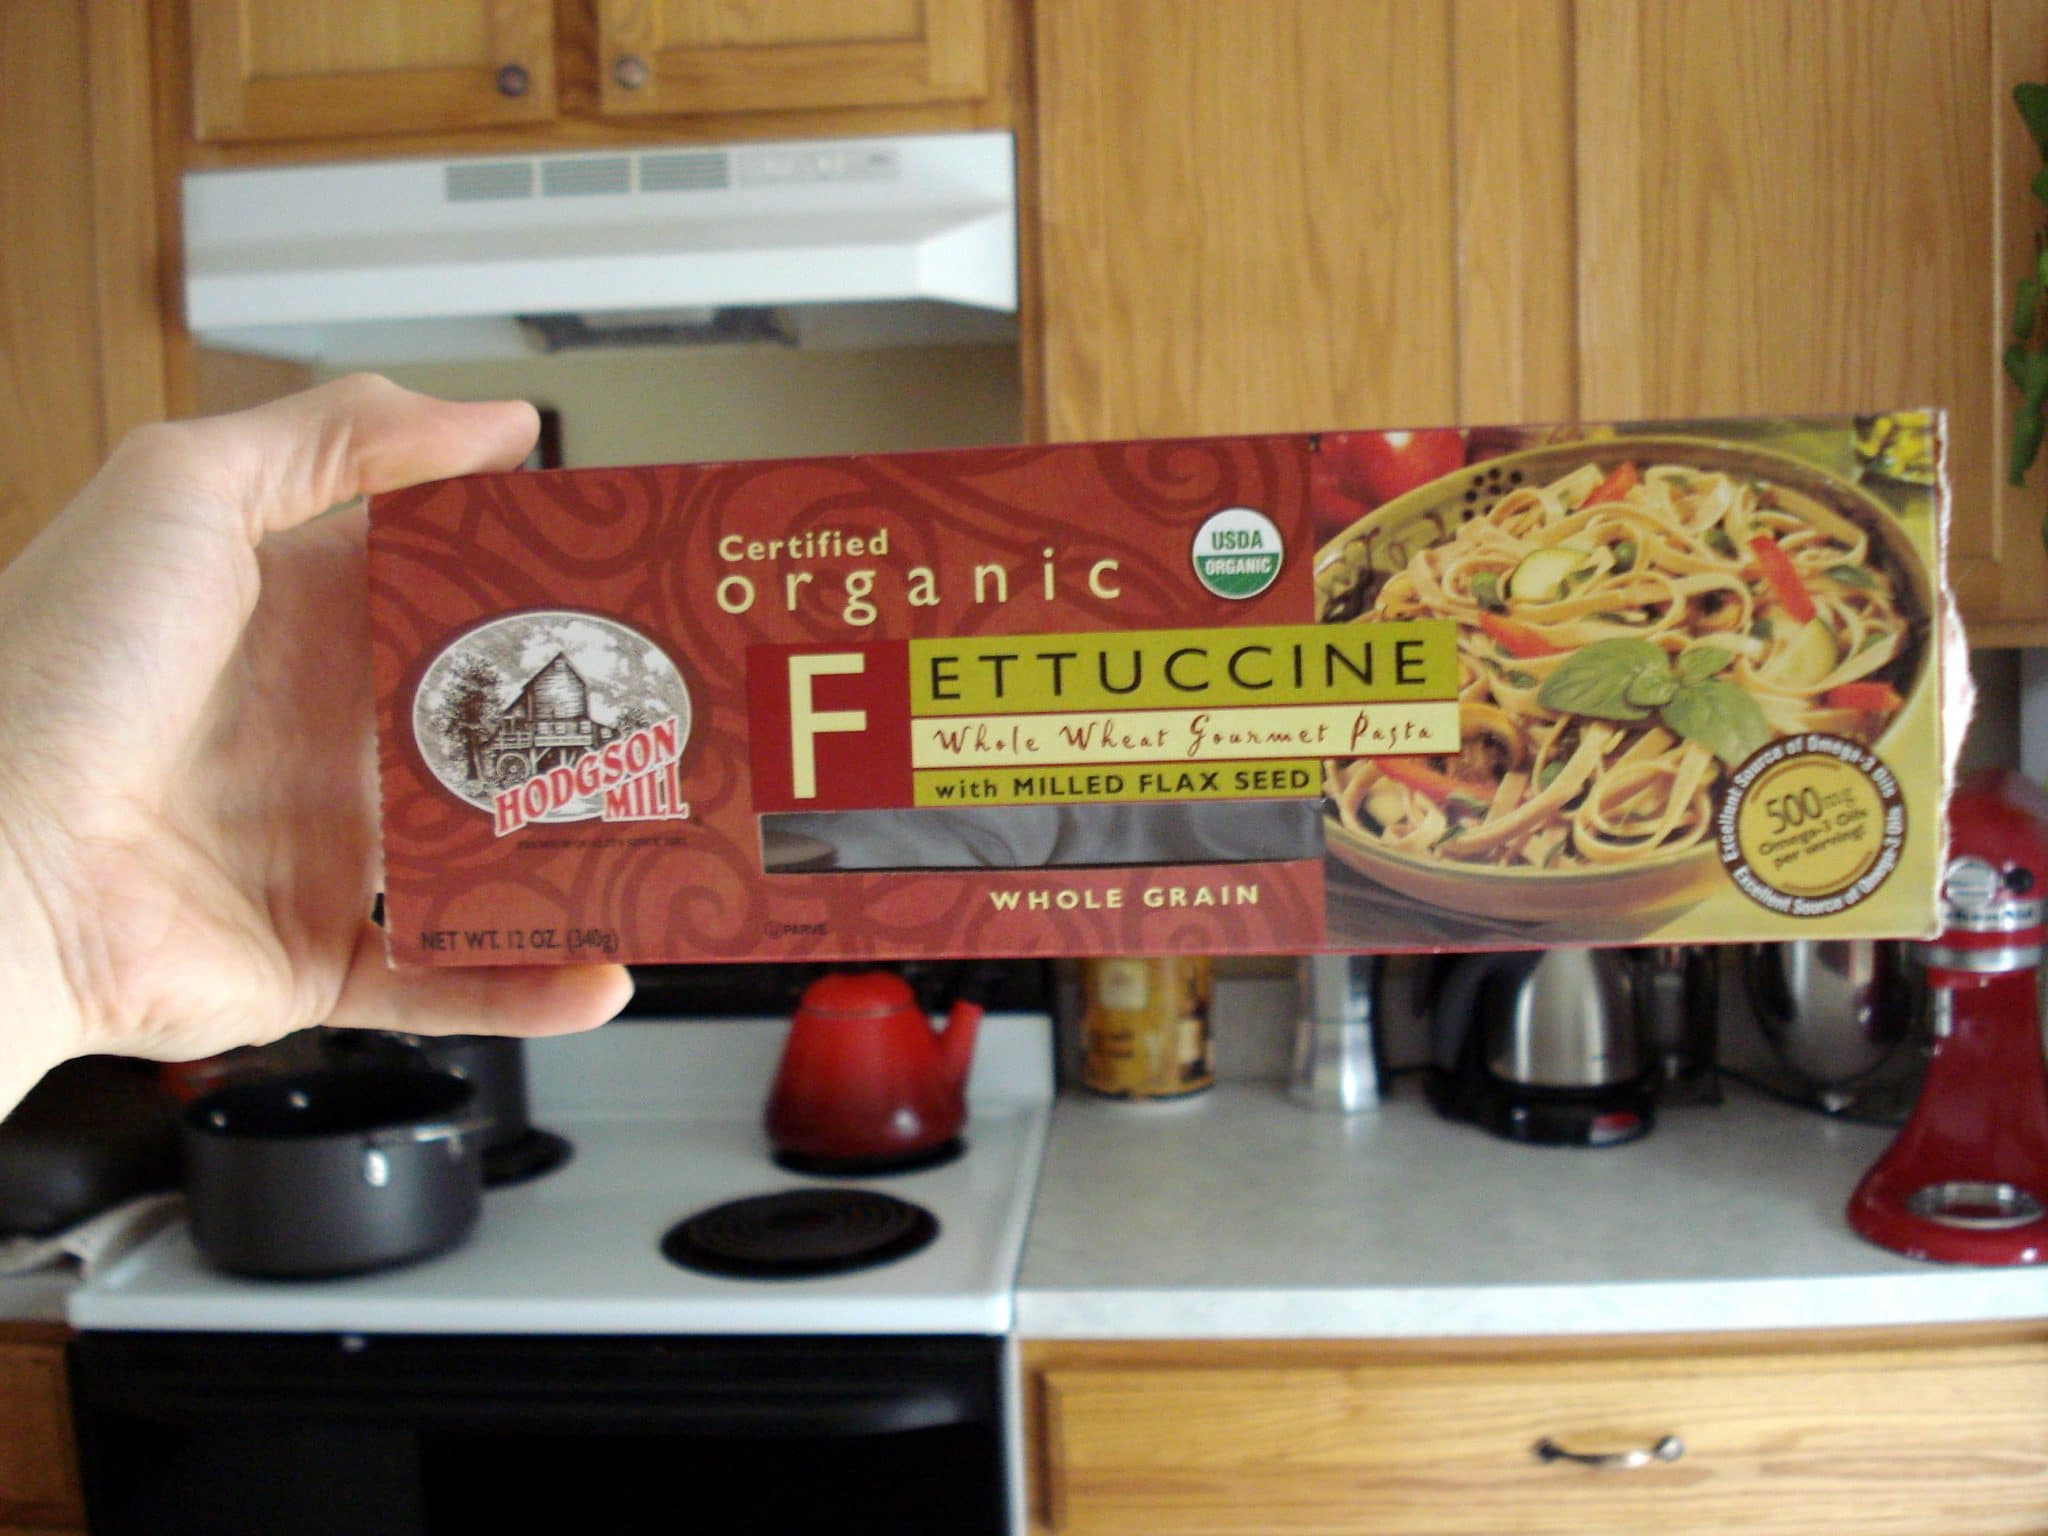 Organic milled flax seed fettuccini in the box